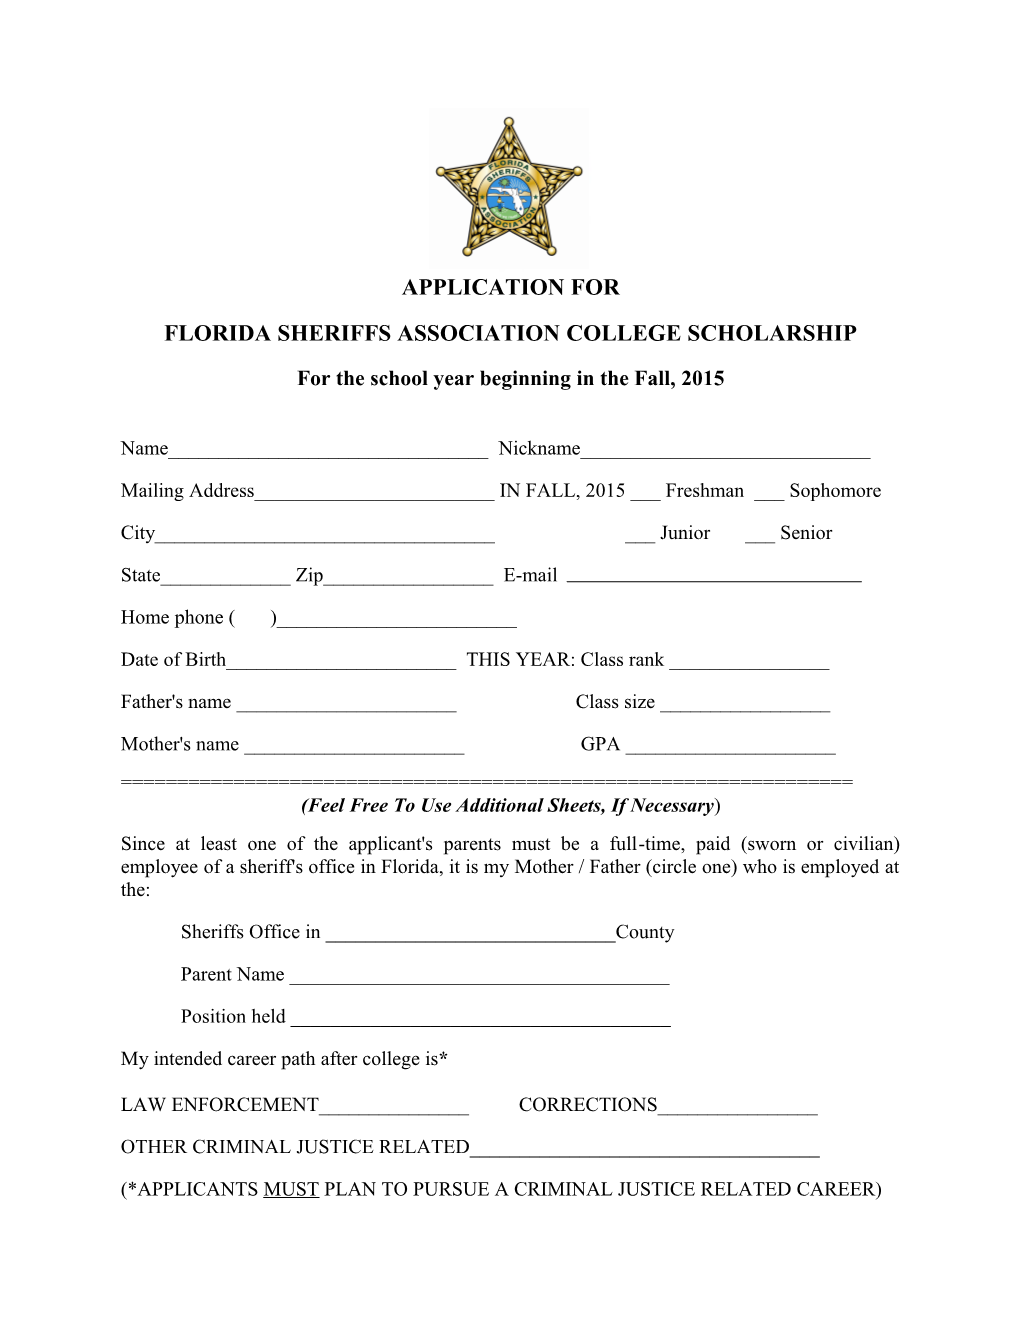 Florida Sheriffs Association College Scholarship